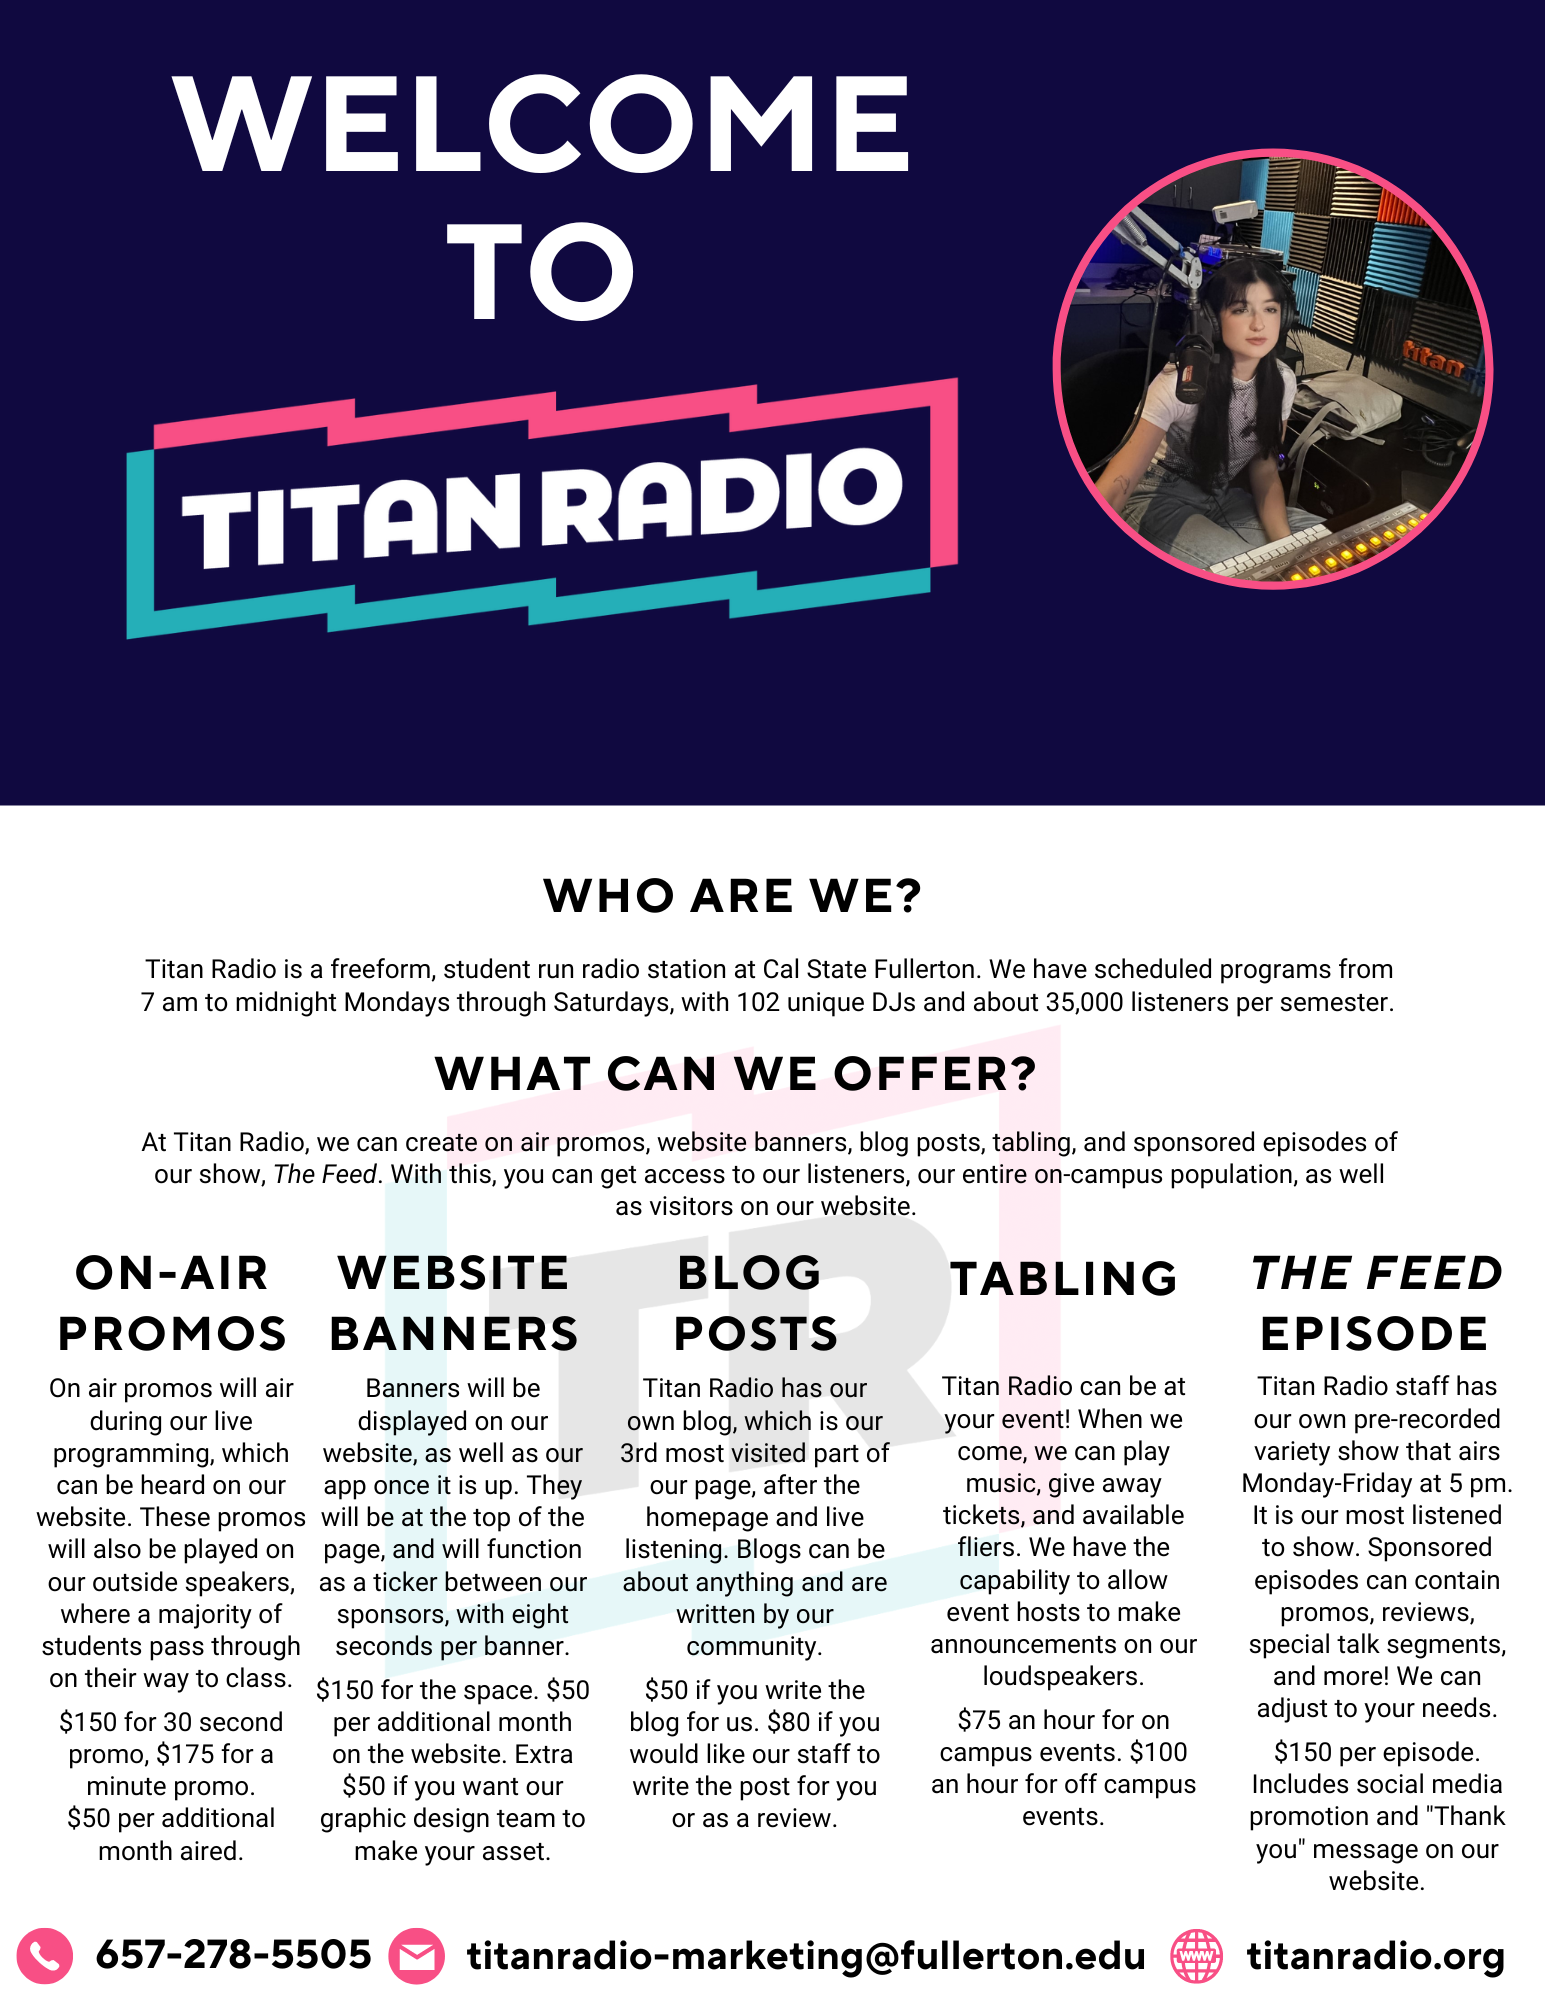 Titan Radio Services Offered